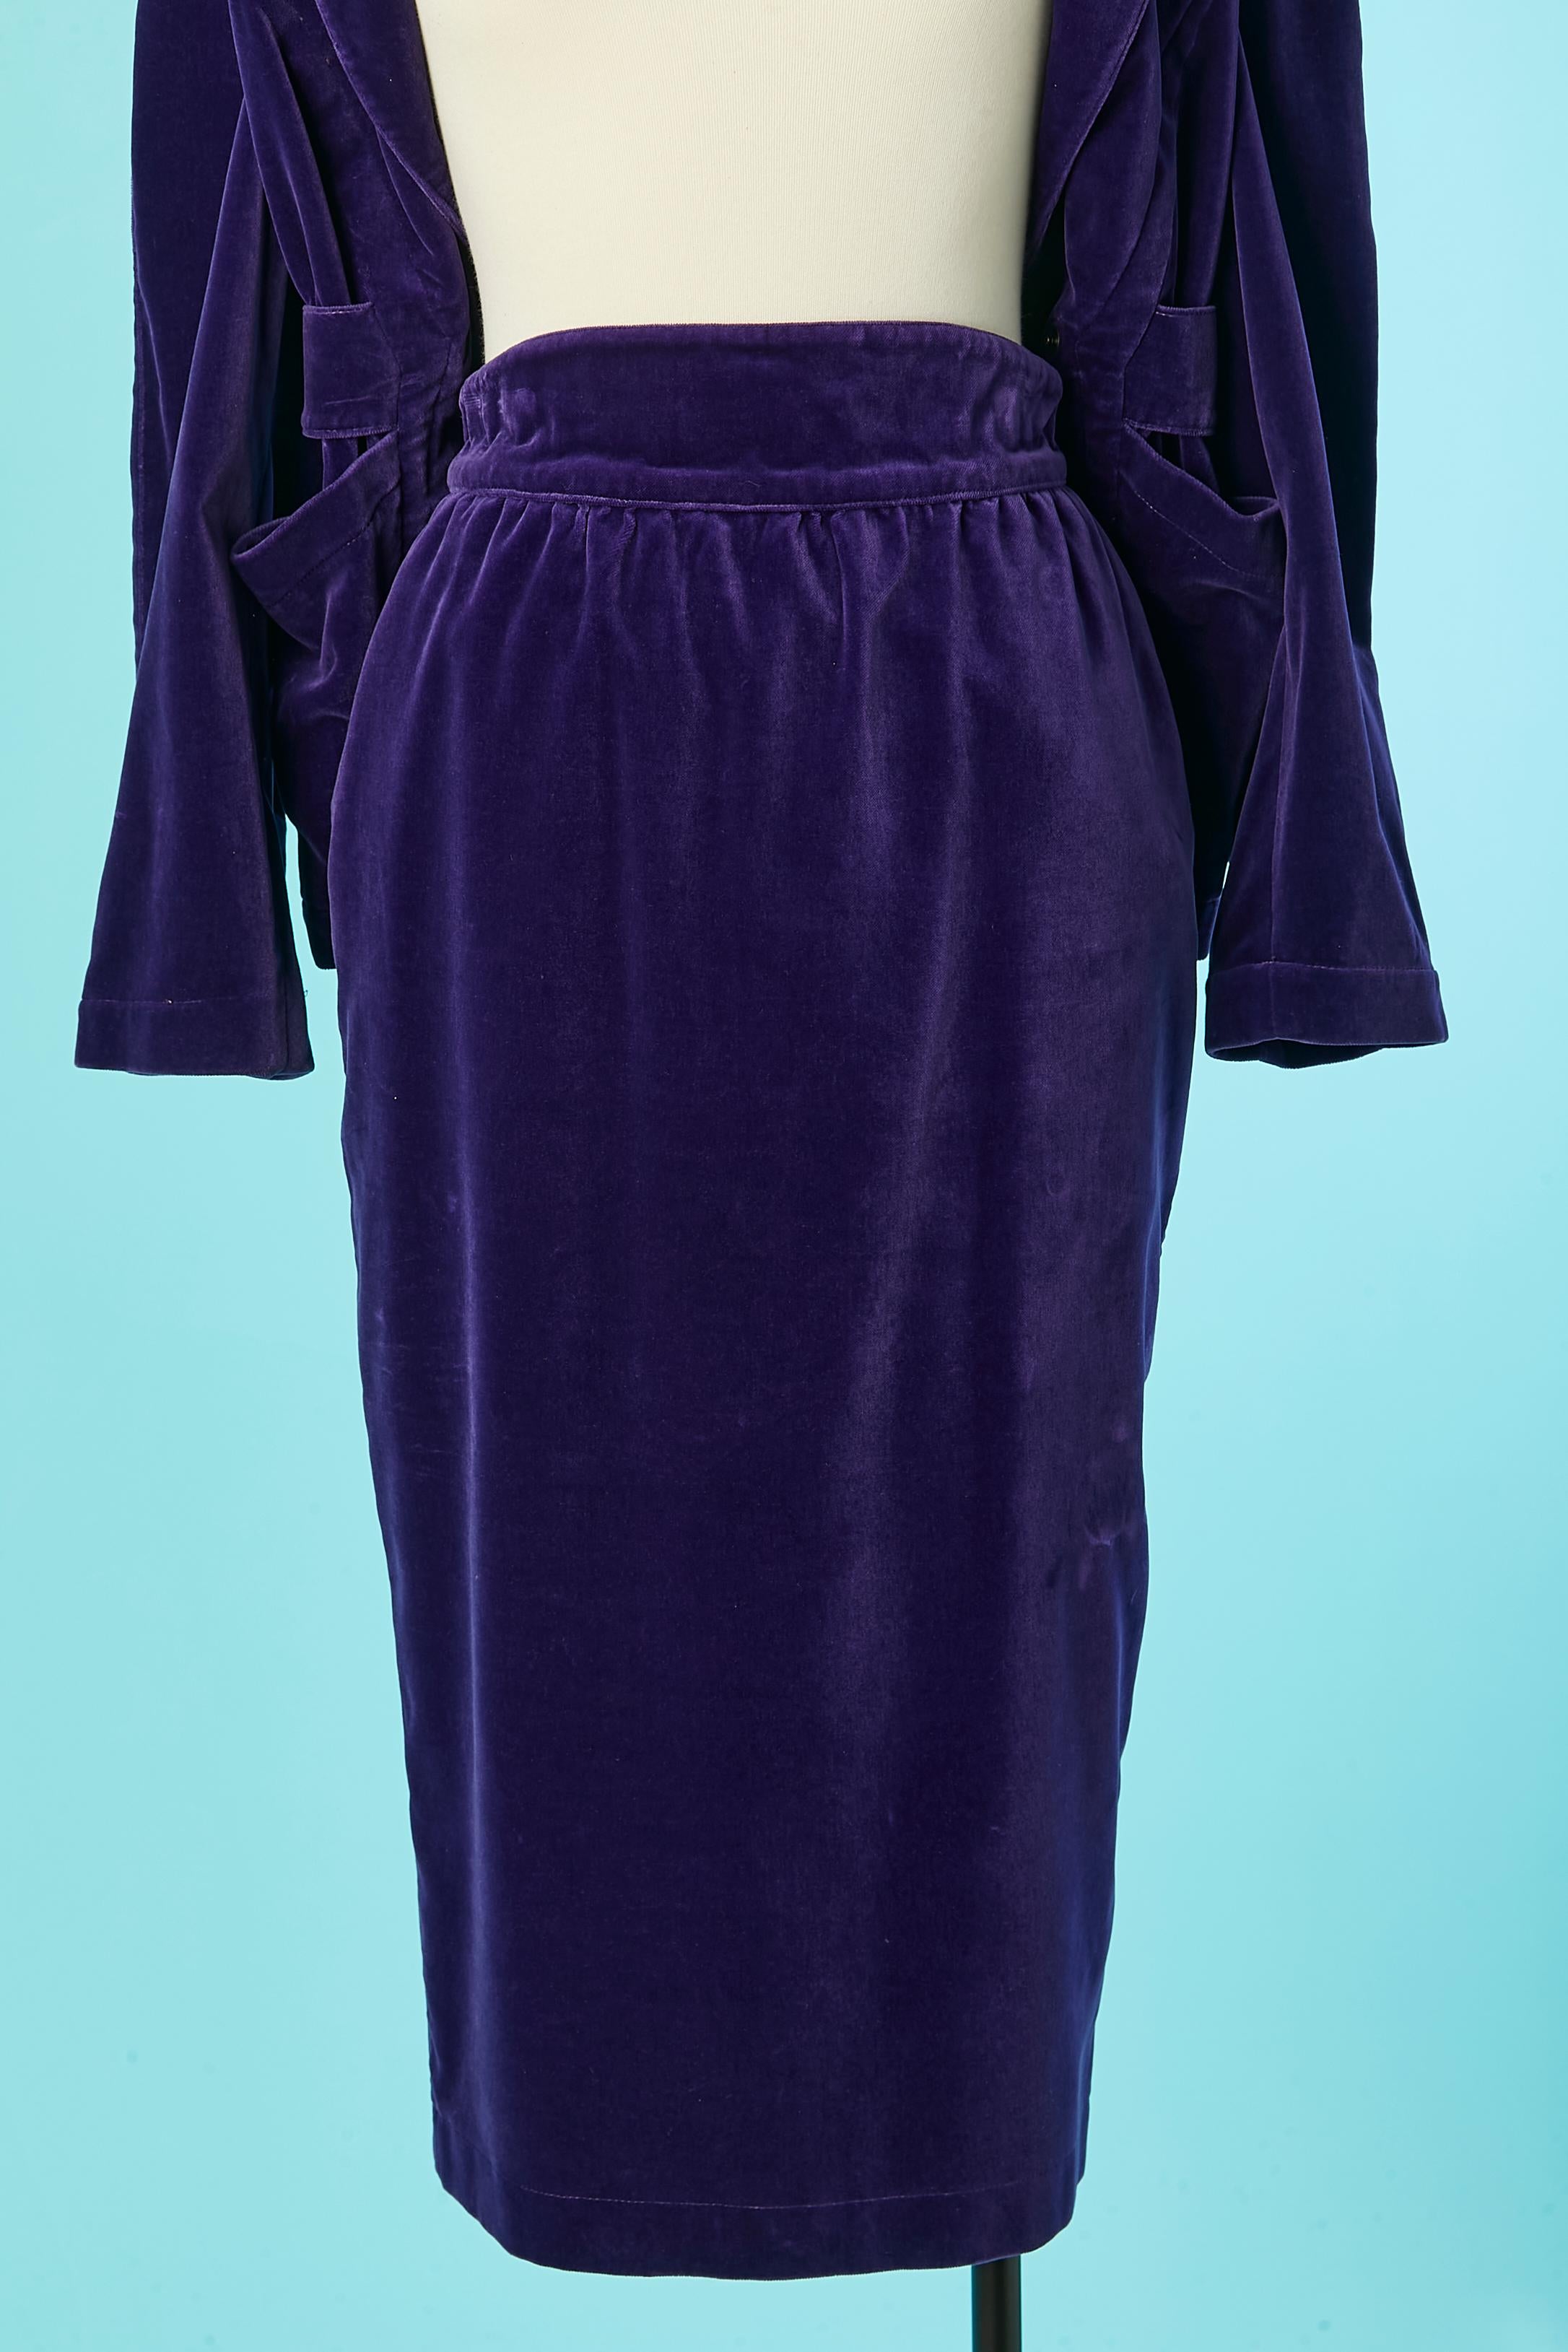 Purple velvet skirt-suit Thierry Mugler Circa 1980's  For Sale 3